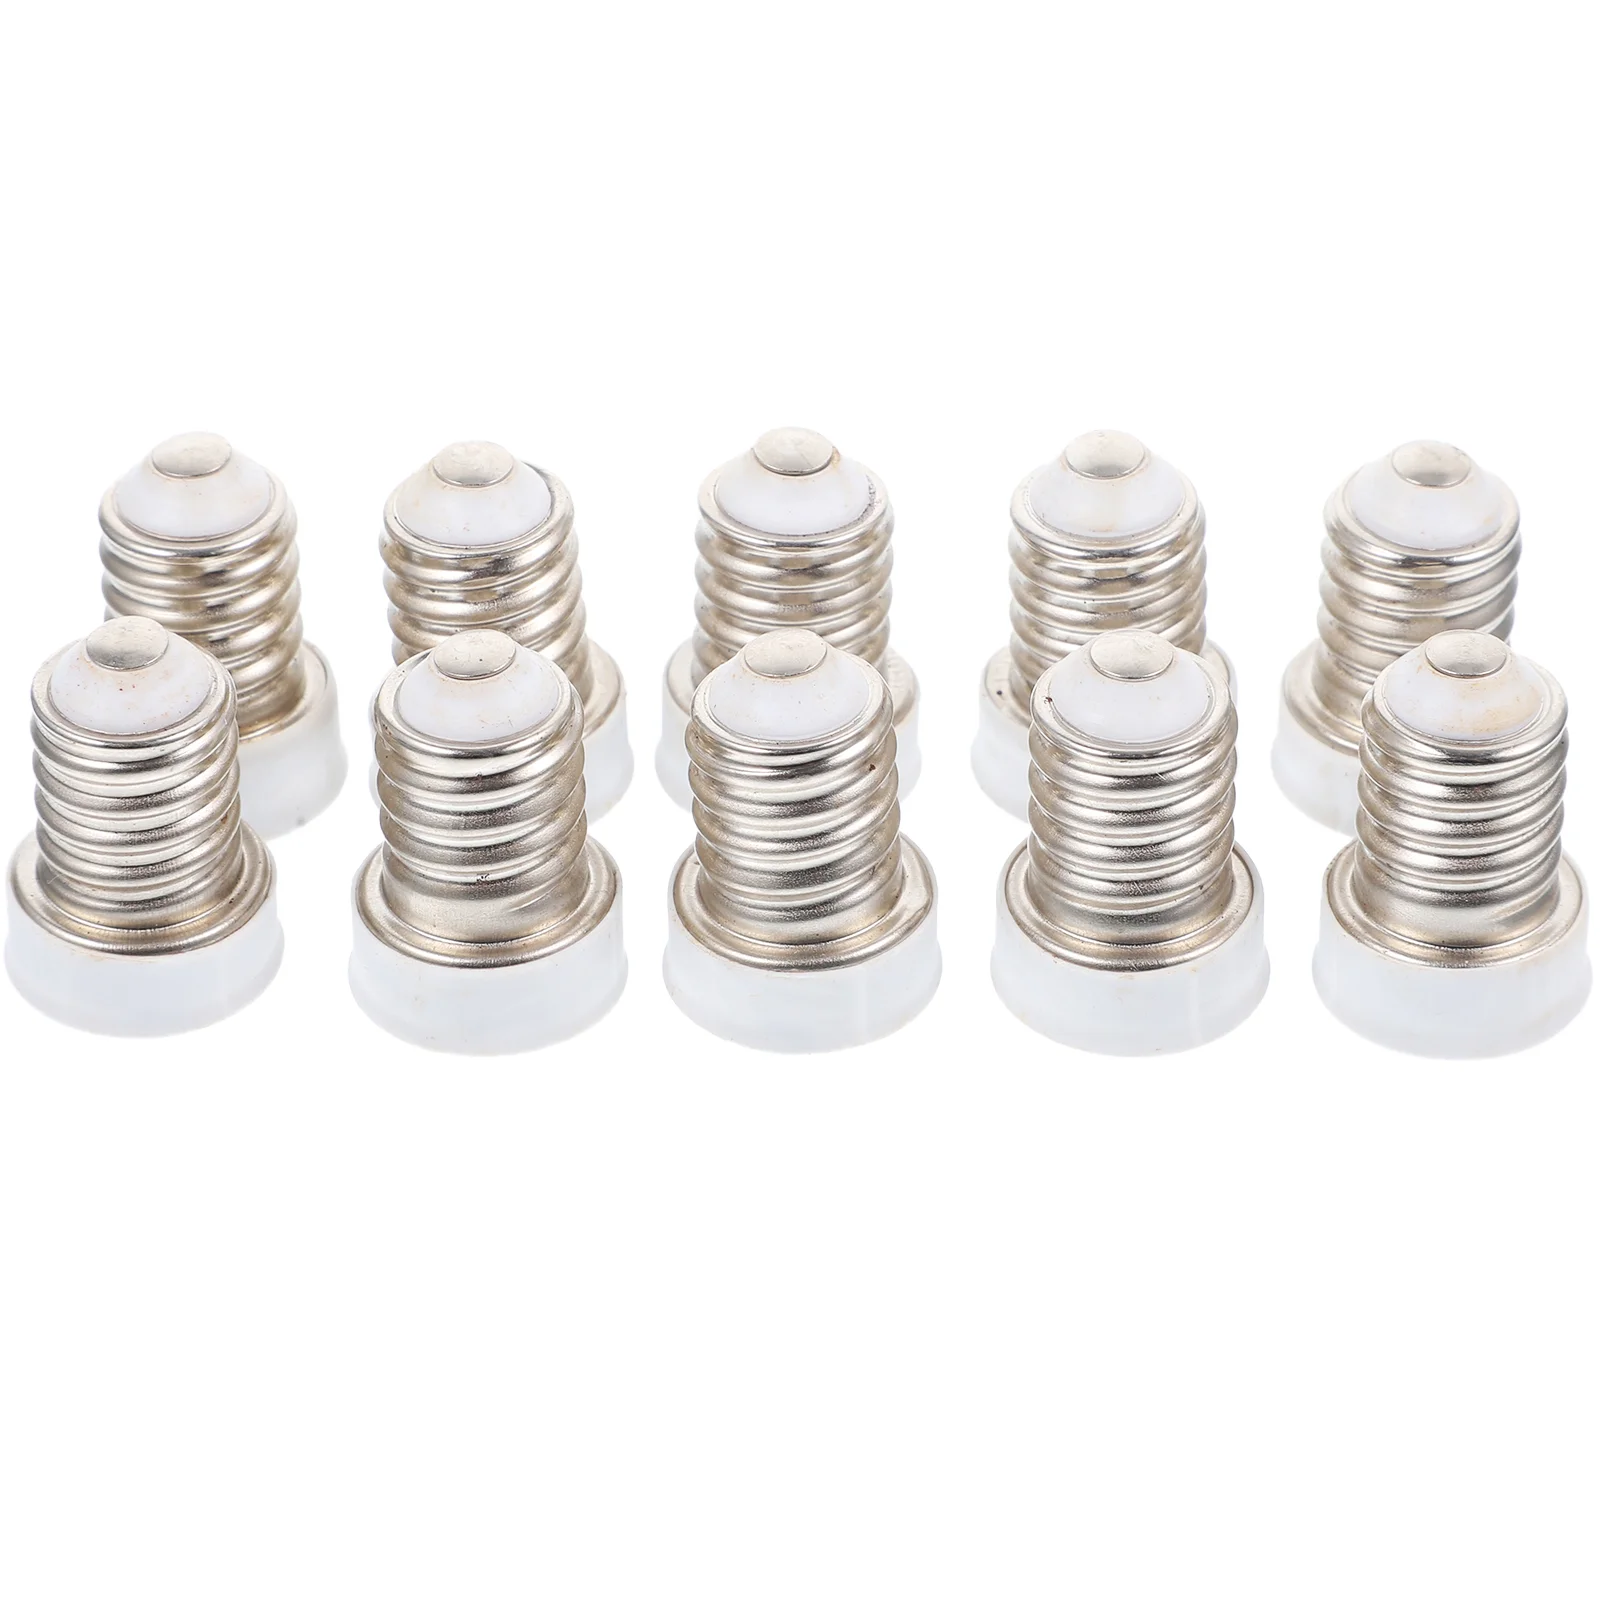 

10 Pcs E12 Socket Lampholder Adapter Light Base Converters Bulb Adapters White Copper E14